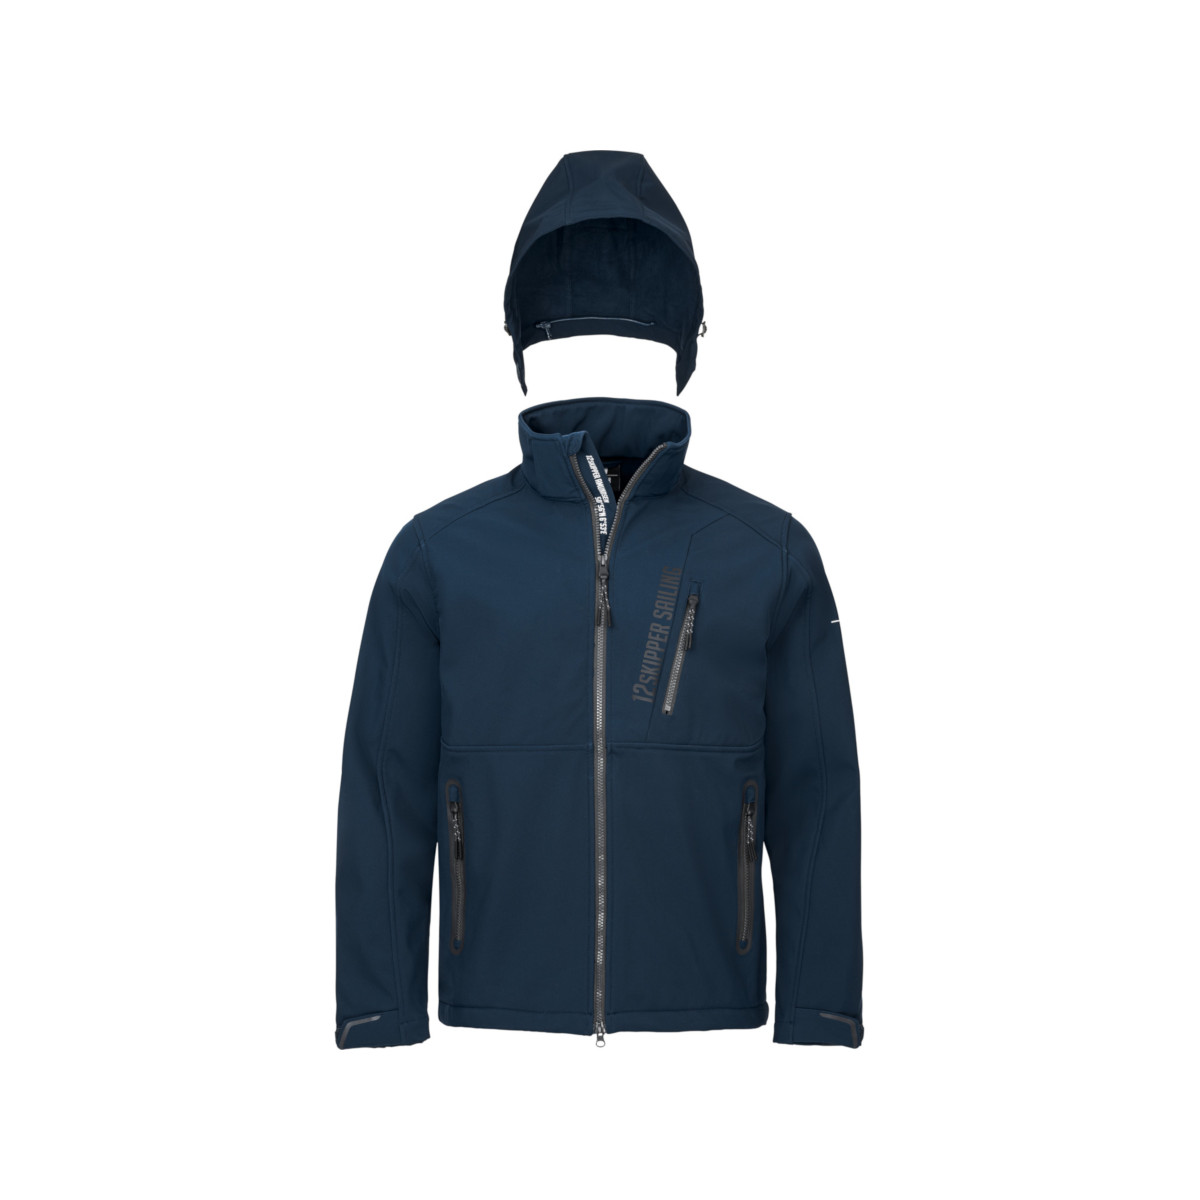 12skipper Amundsen veste softshell unisexe - bleu marine, taille L